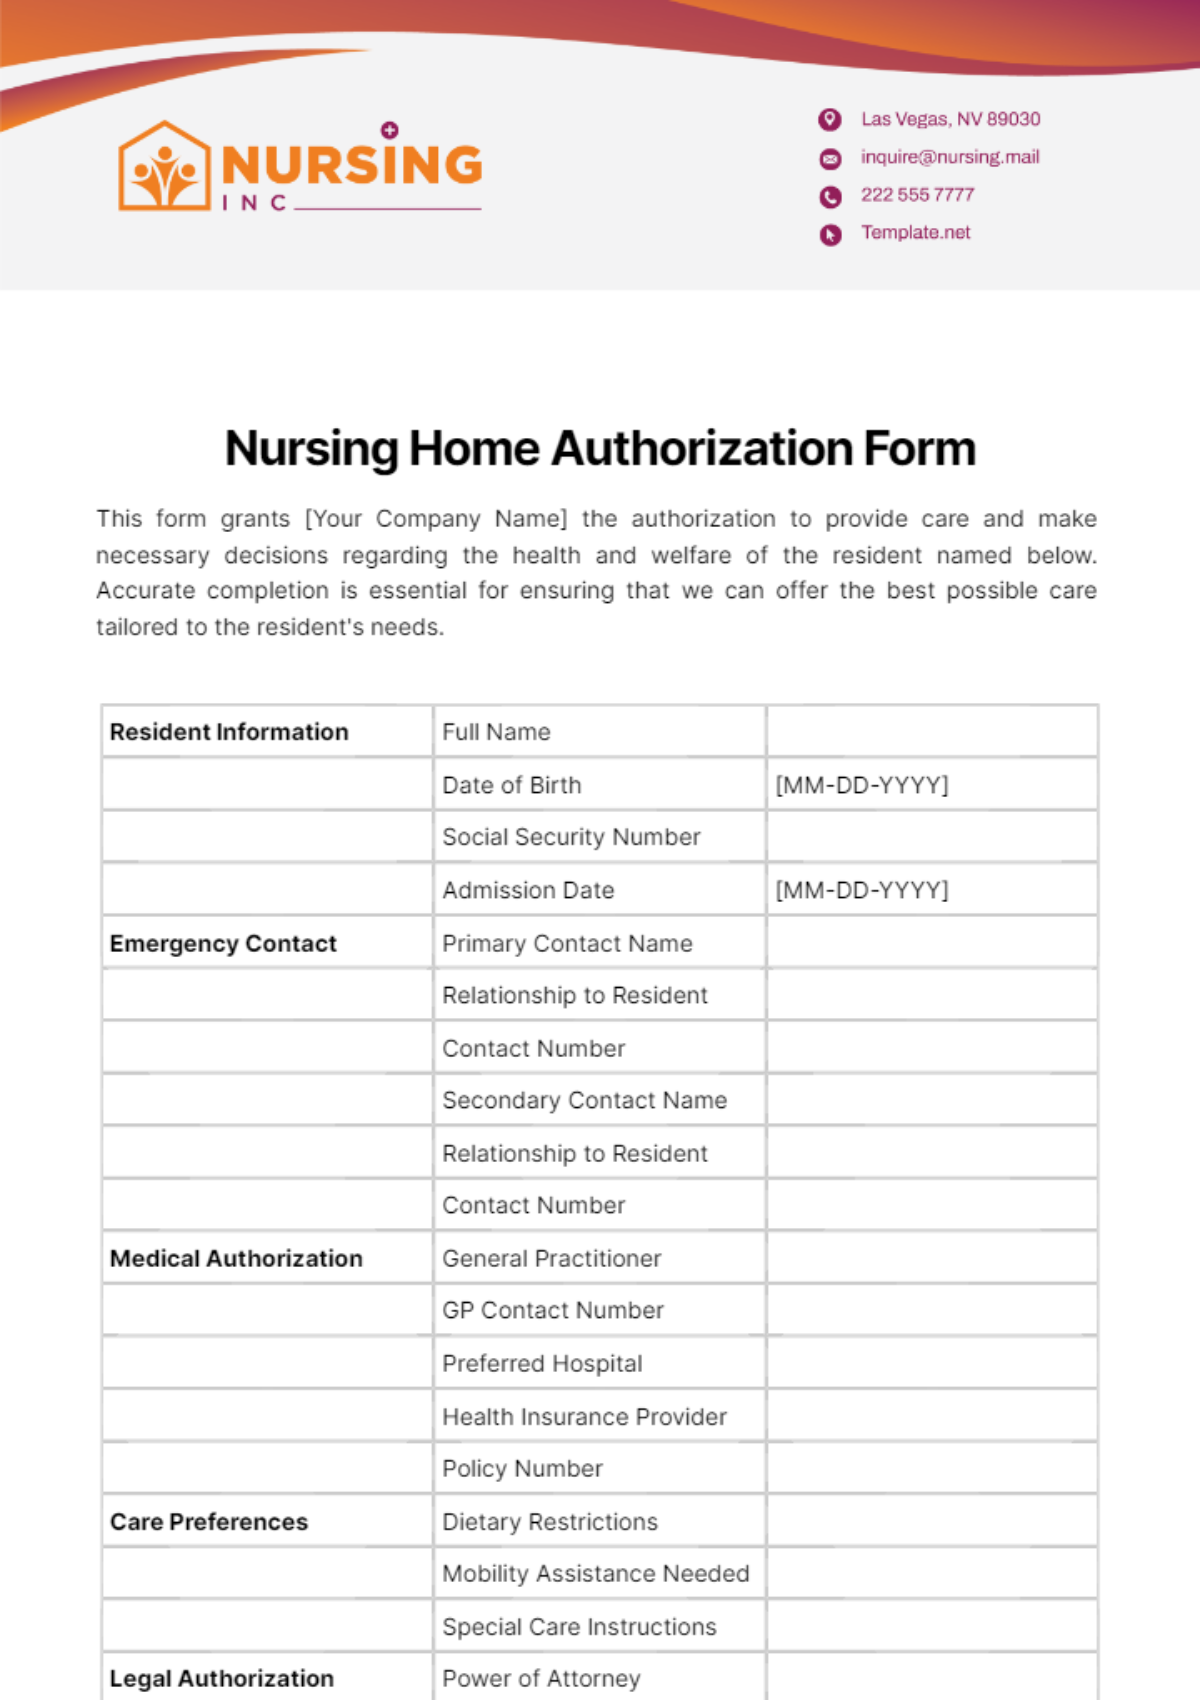 Nursing Home Authorization Form Template